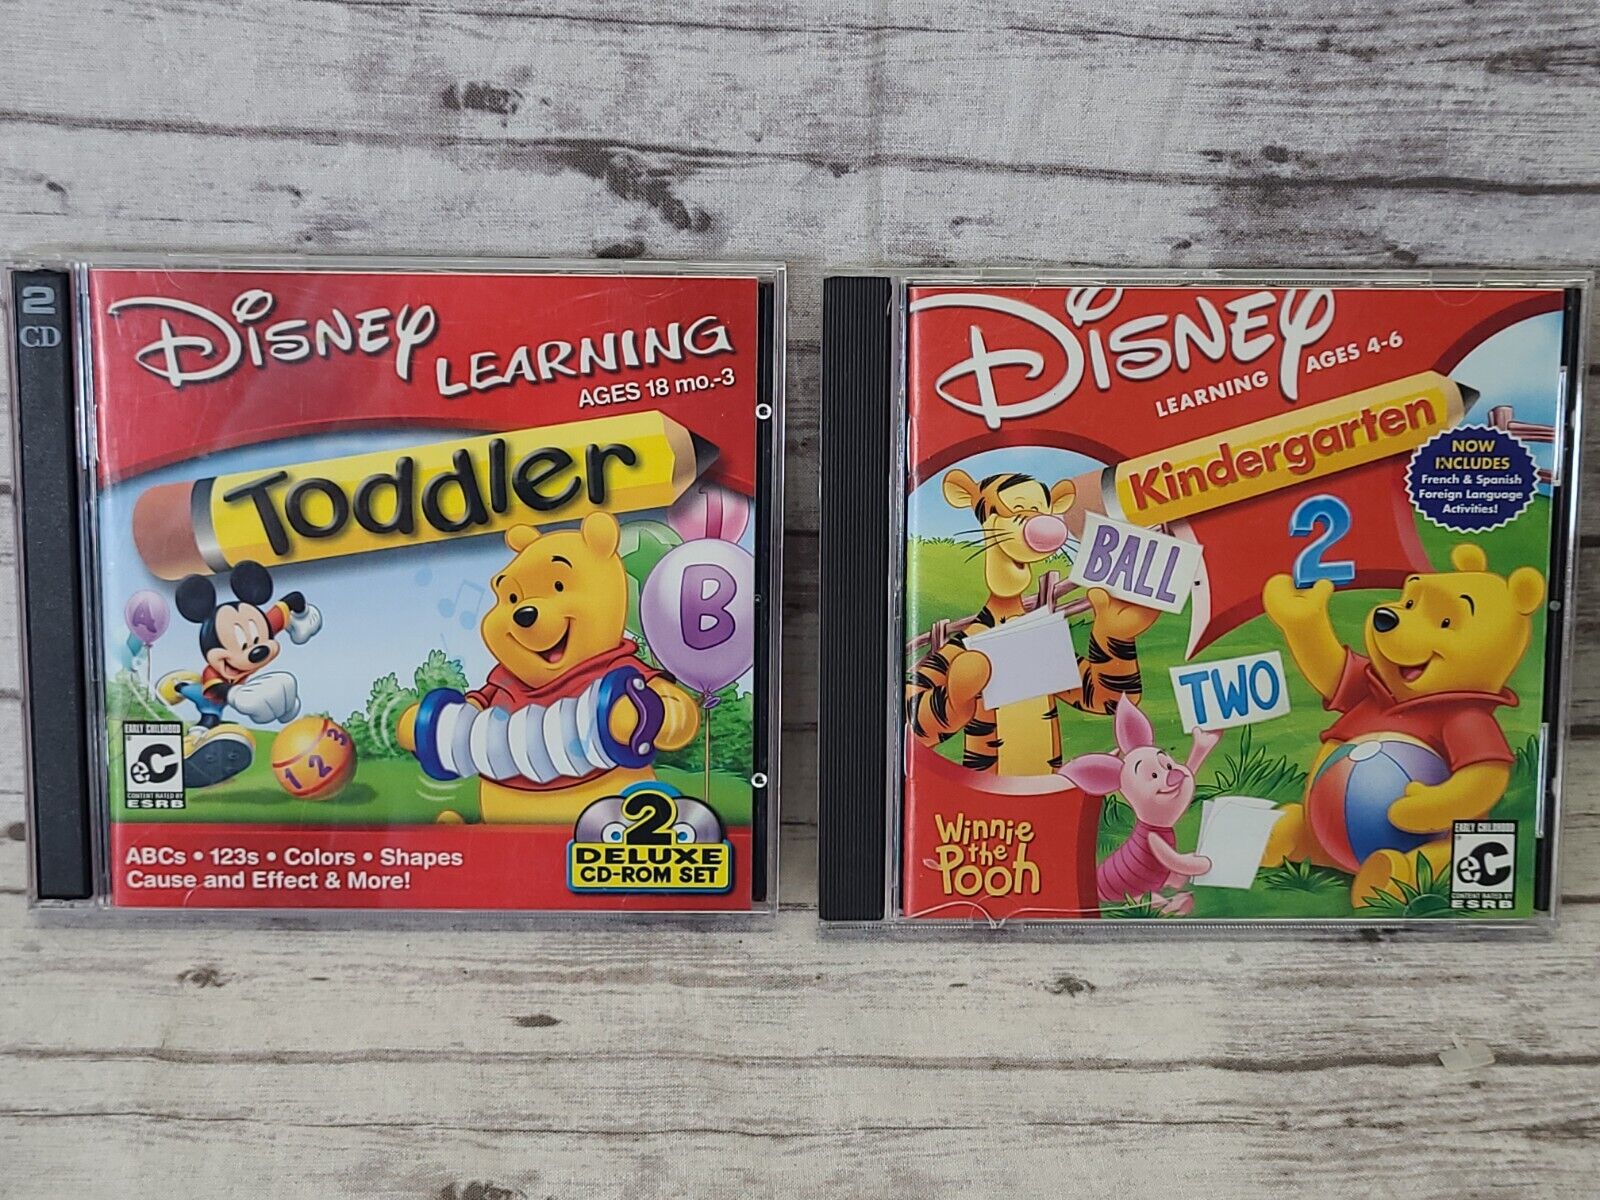 Disney's Winnie the Pooh Kindergarten and toddler for Windows/Mac CD-ROM